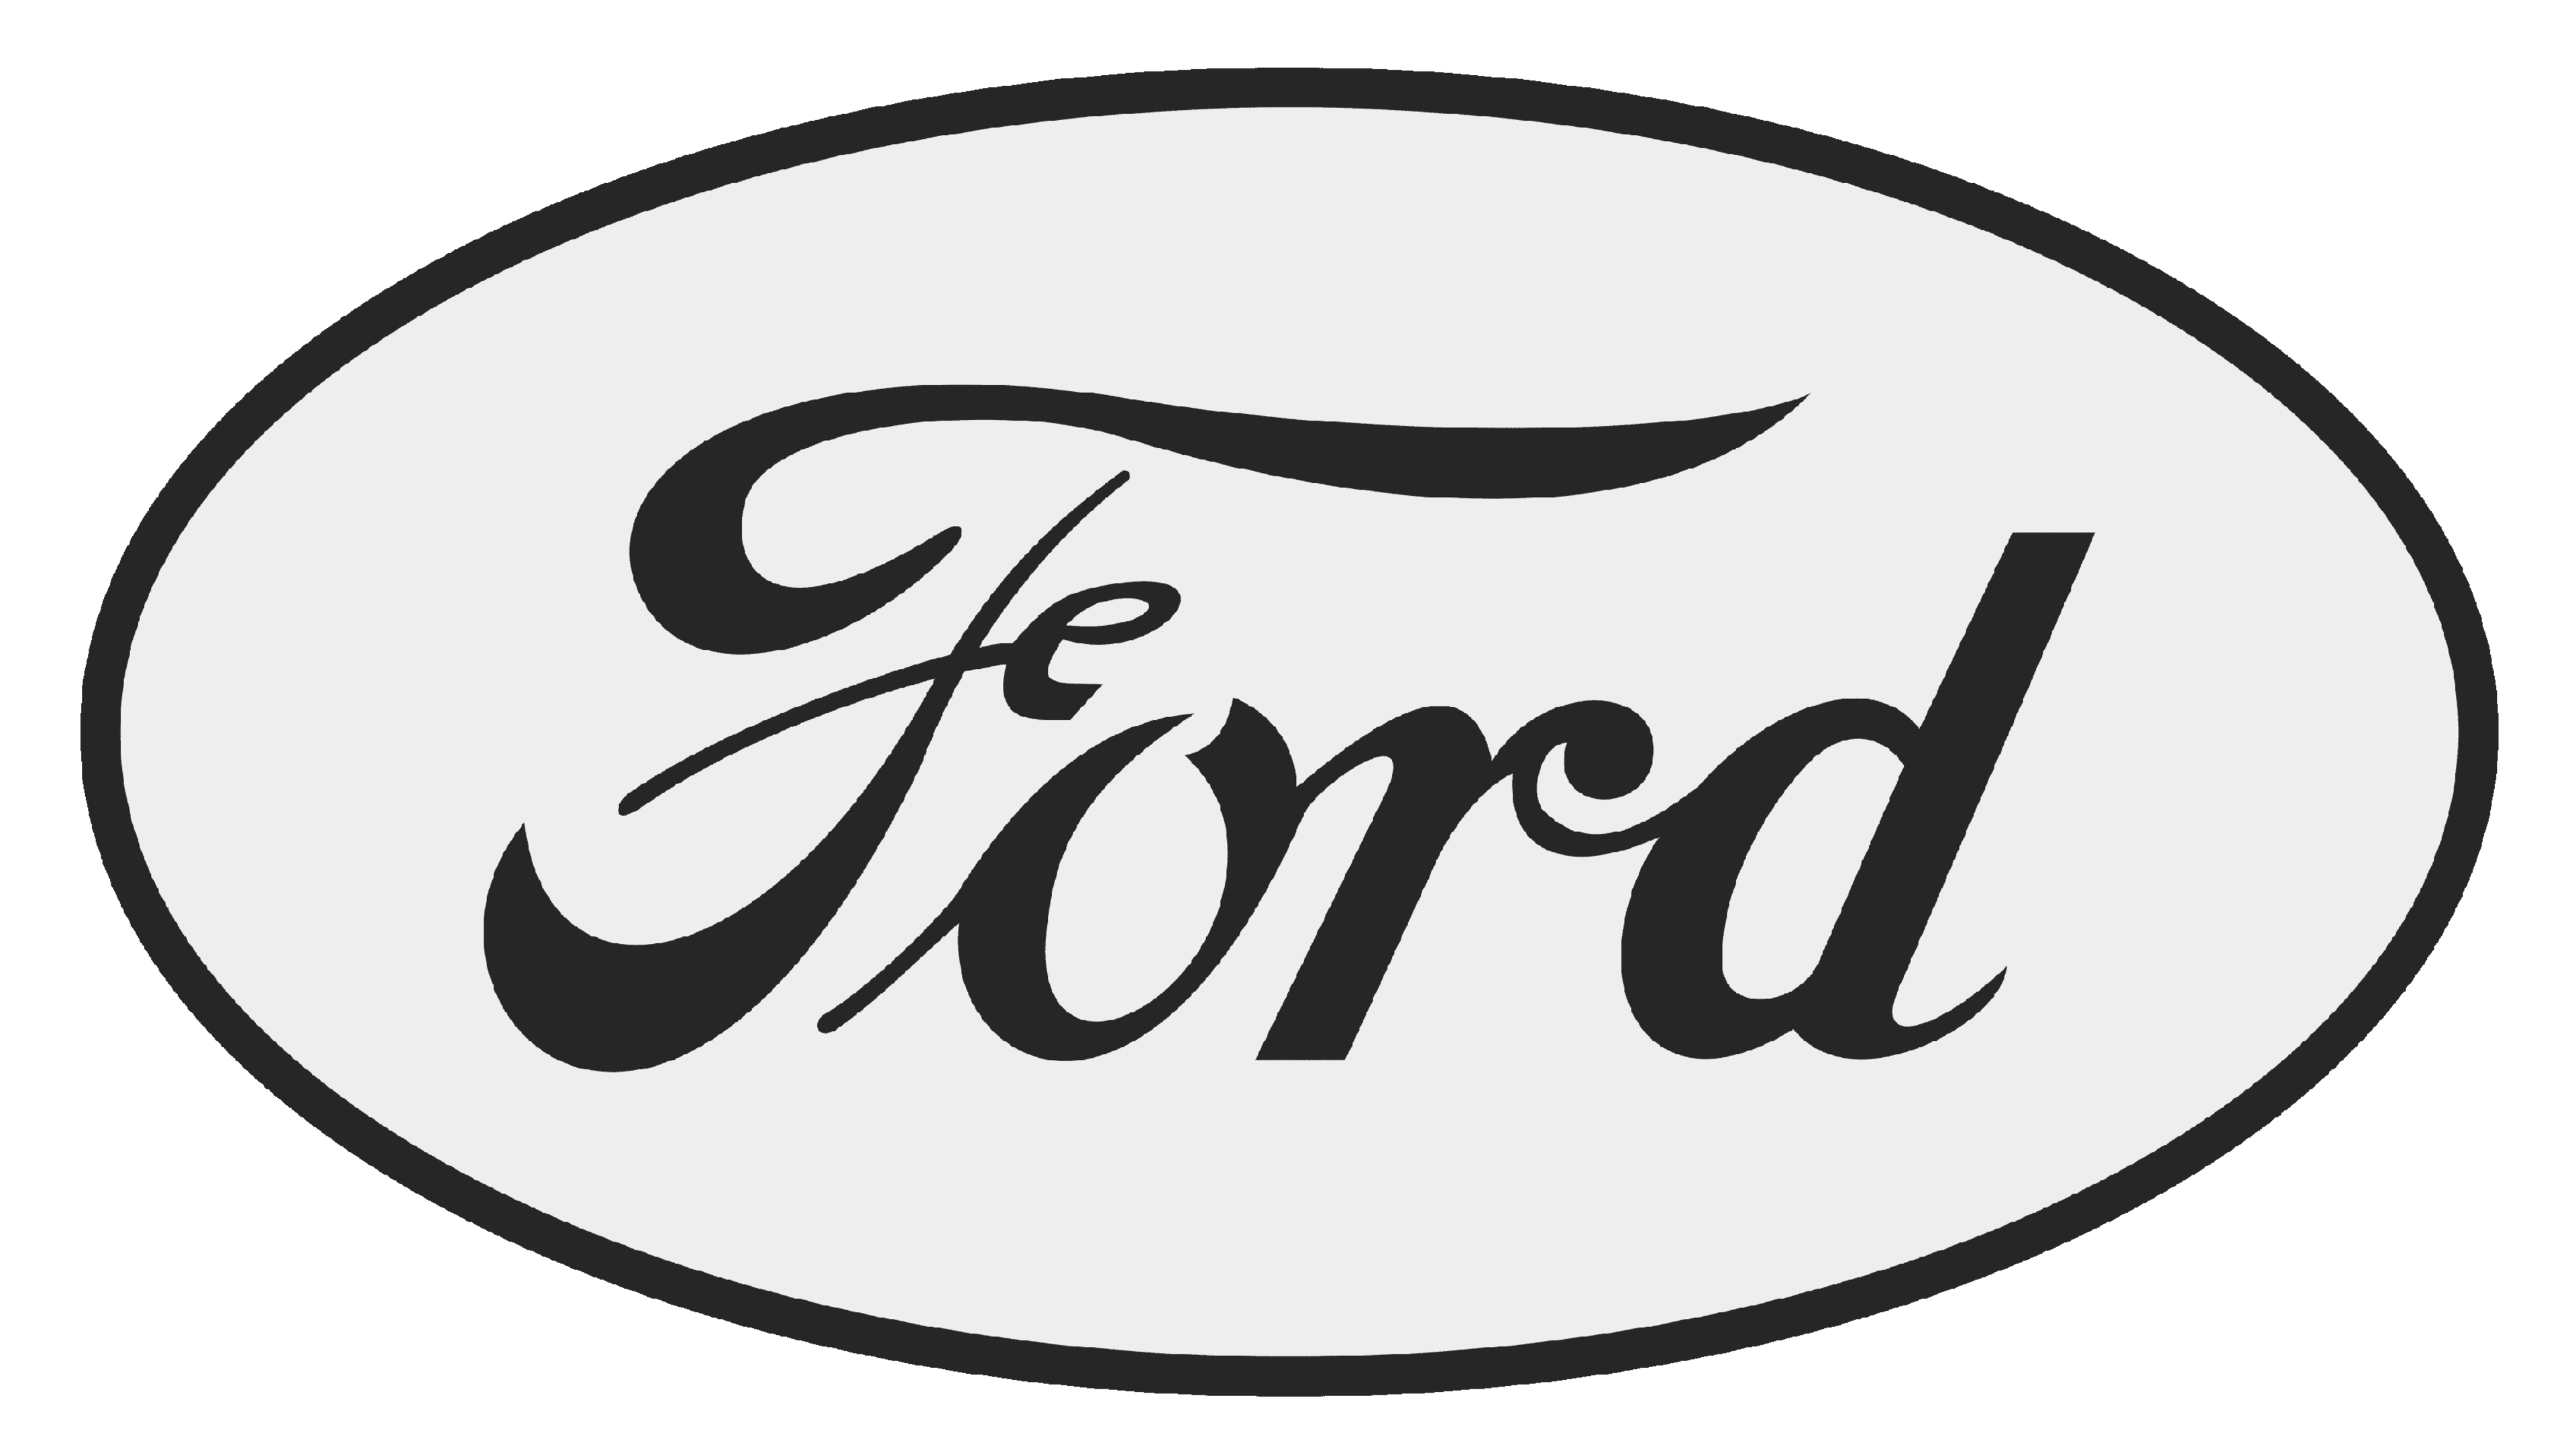 Ford Logo Black And White | vlr.eng.br